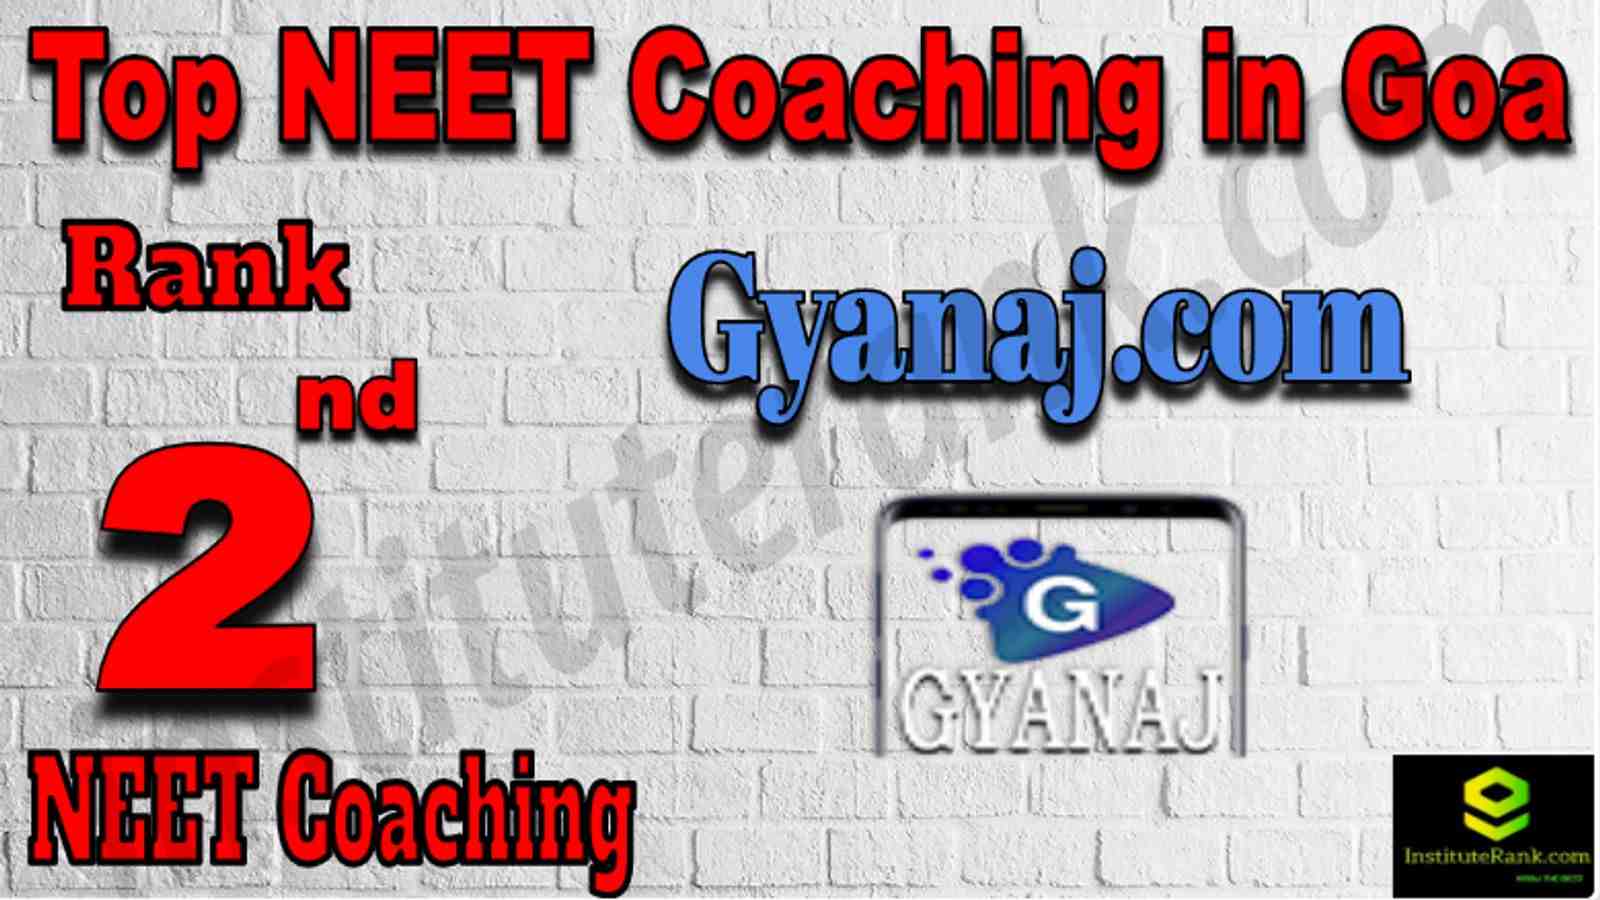 Rank 2 Top NEET Coaching in Goa